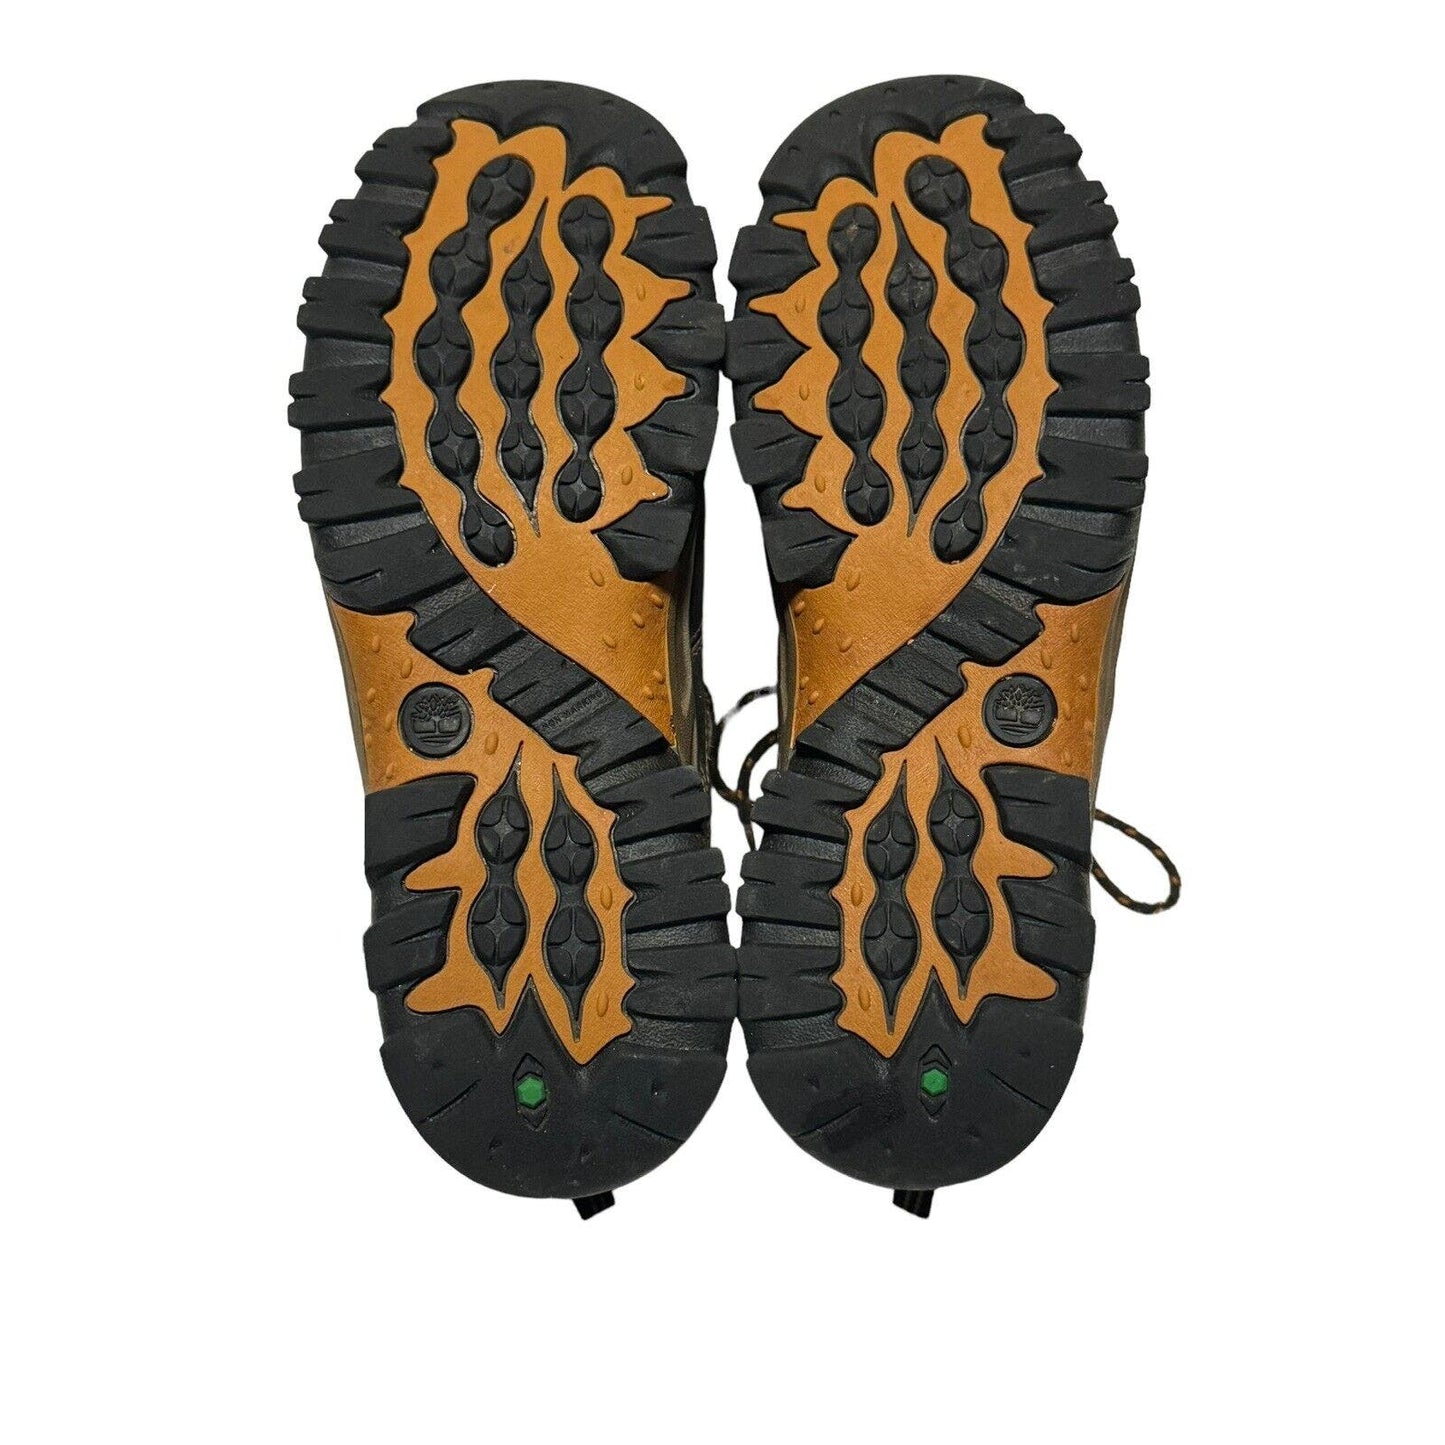 Timberland Mt. Maddsen Mid Waterproof Hiking A14IB Boot Boys Size 6